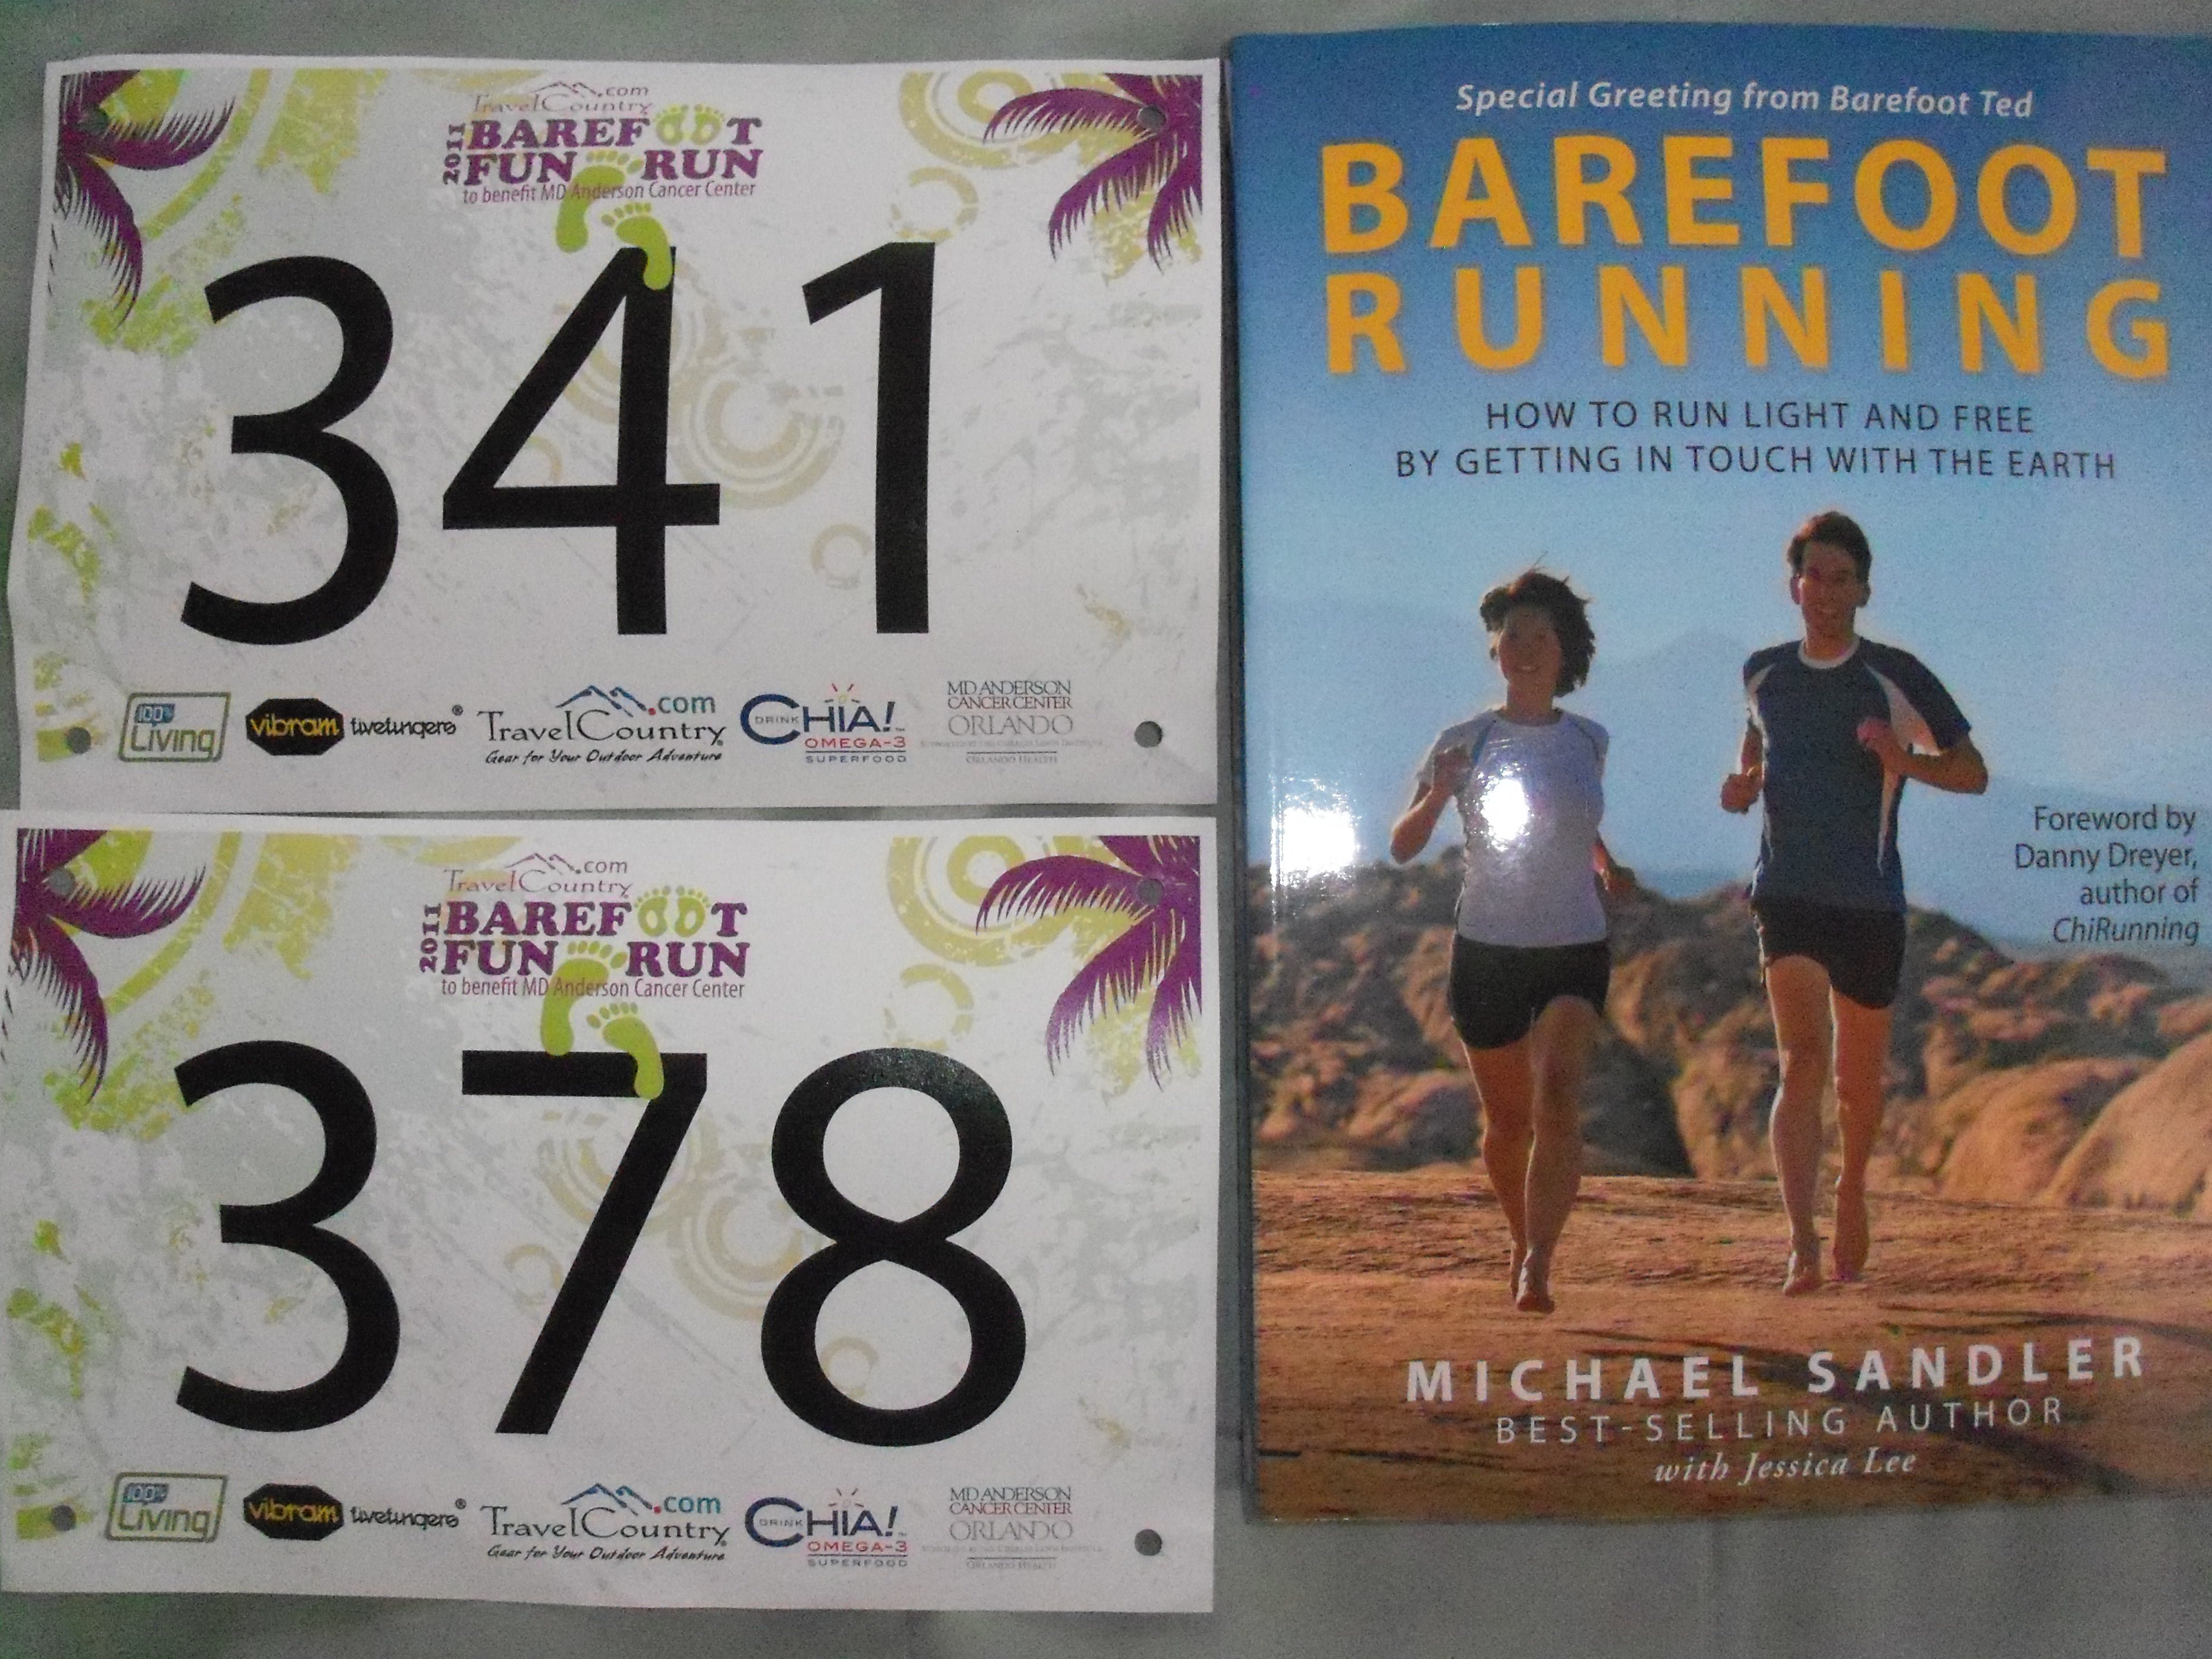 2nd Annual Barefoot Fun Run 5K